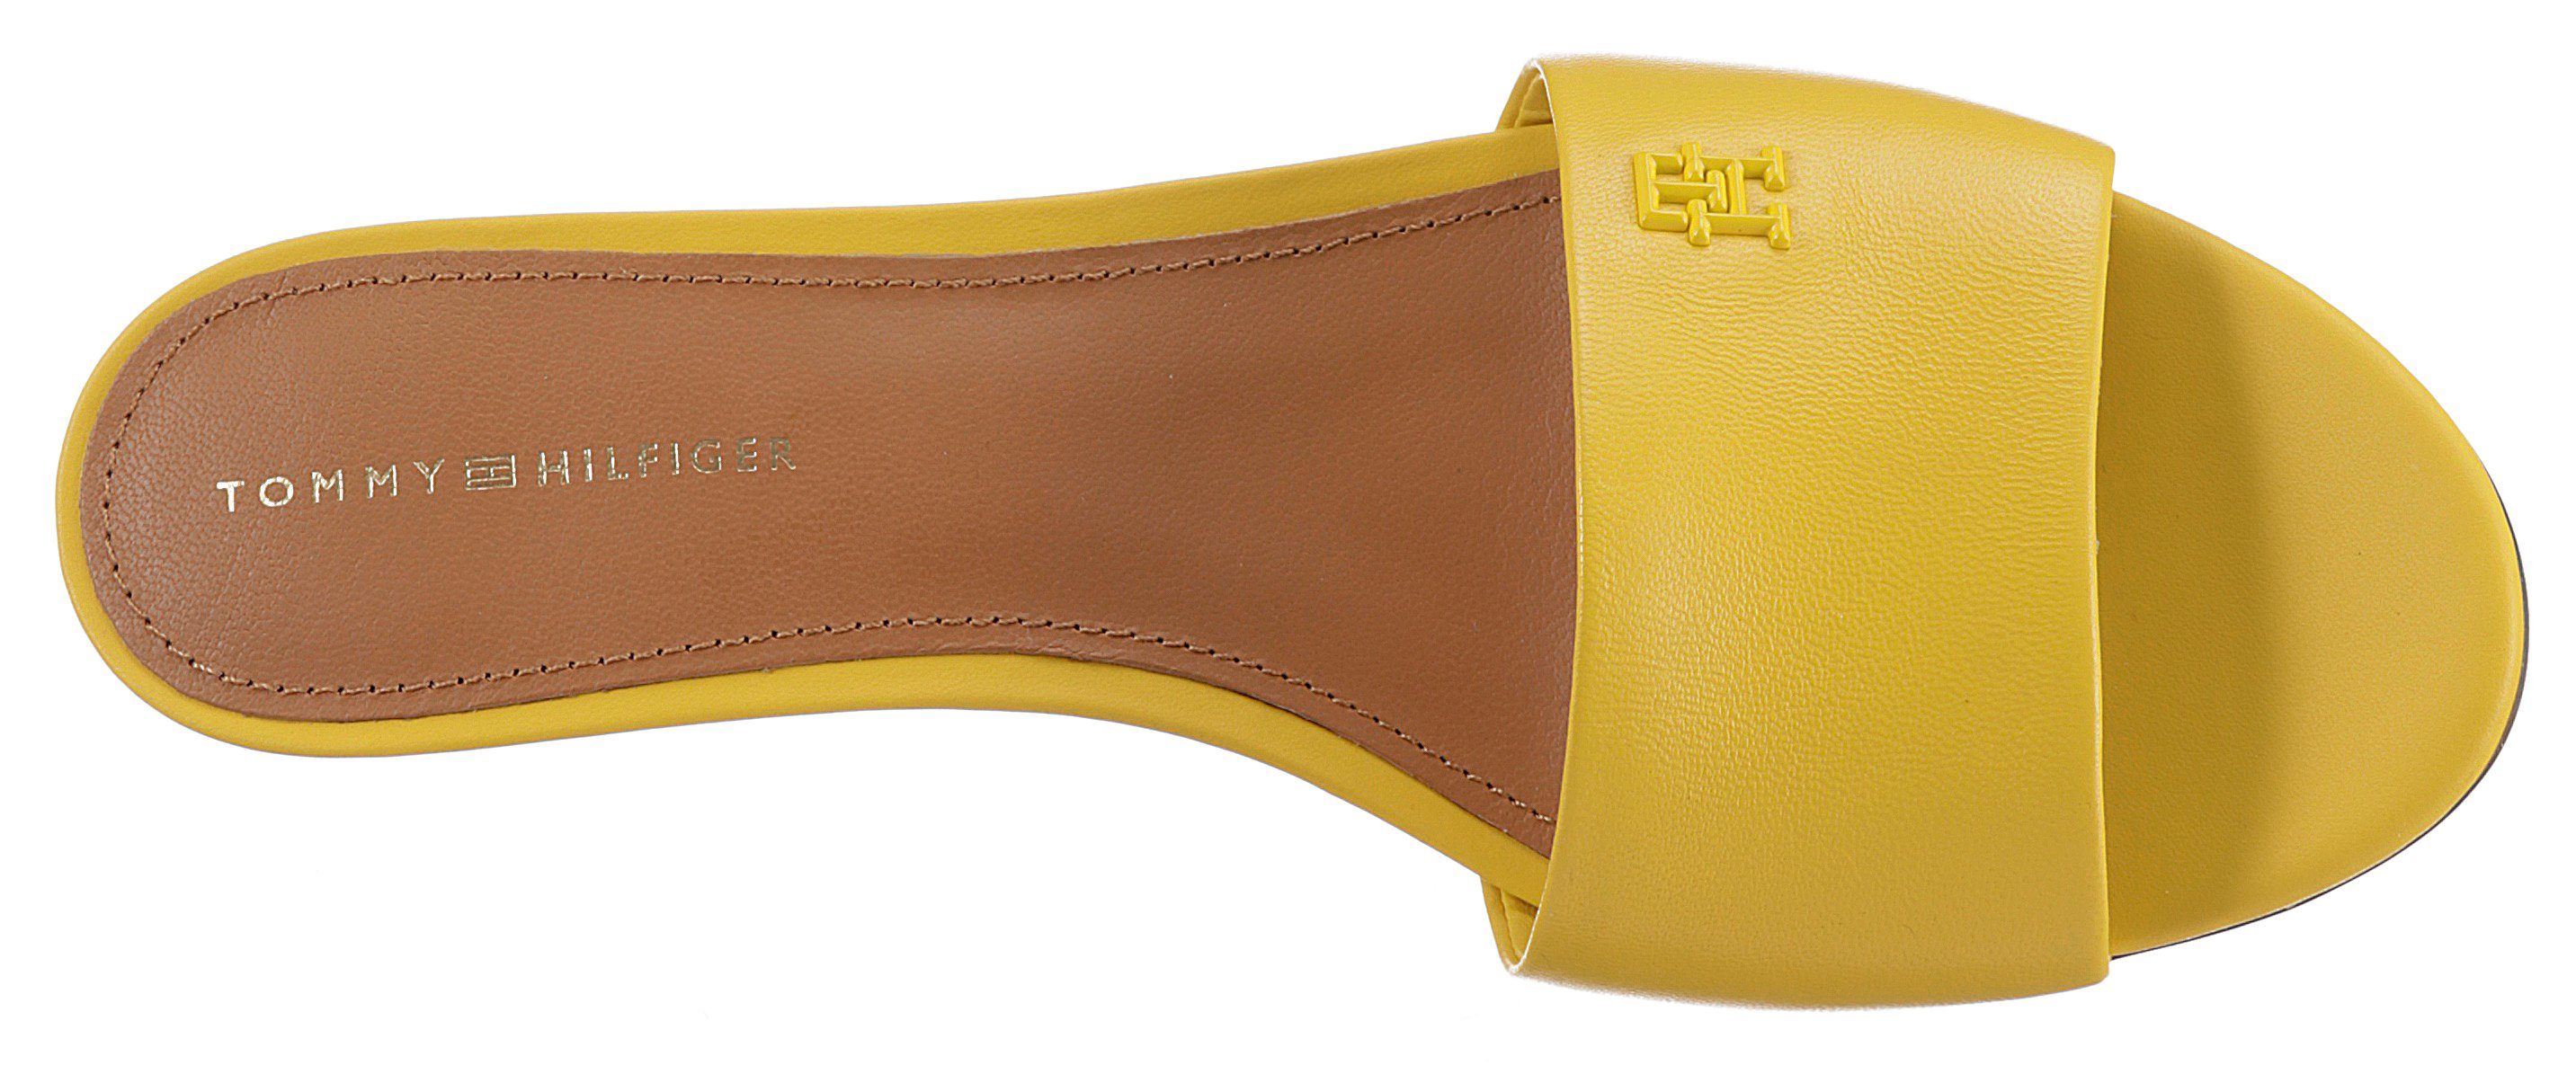 Trichterabsatz, MID TH Form Hilfiger schmale elegantem HEEL Pantolette SANDAL mit Tommy gelb ELEVATED